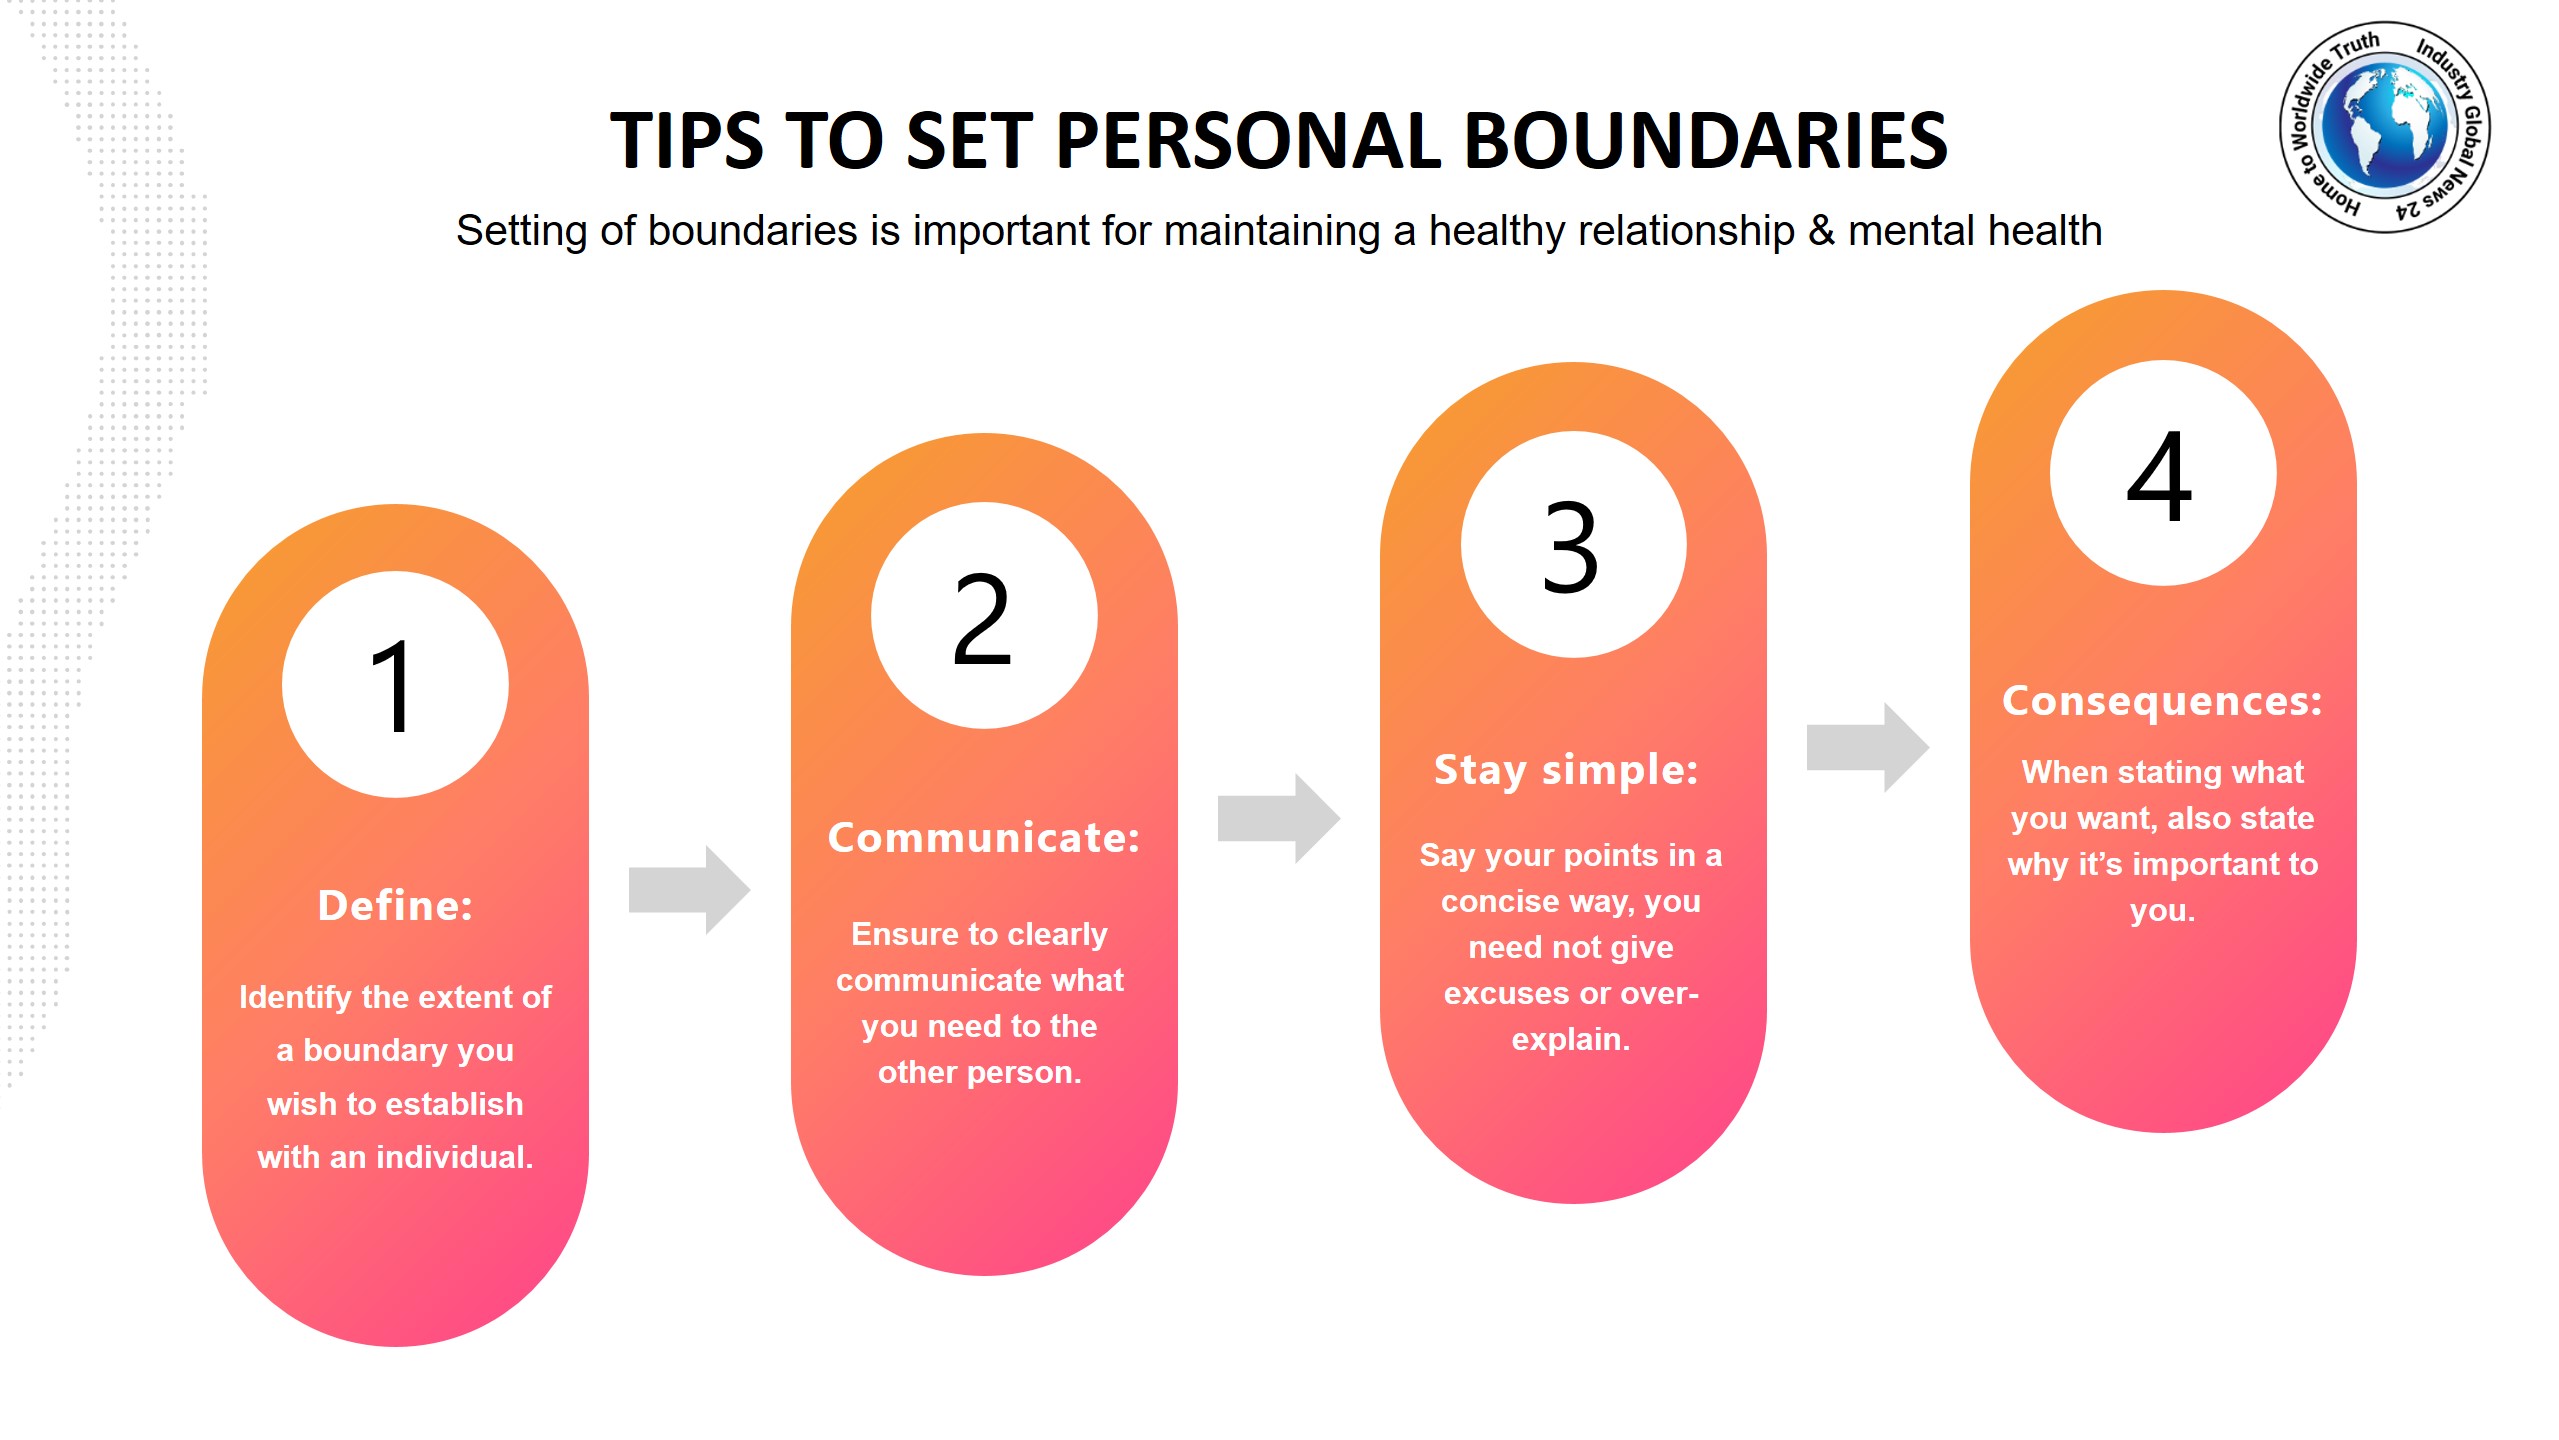 Tips to set personal boundaries